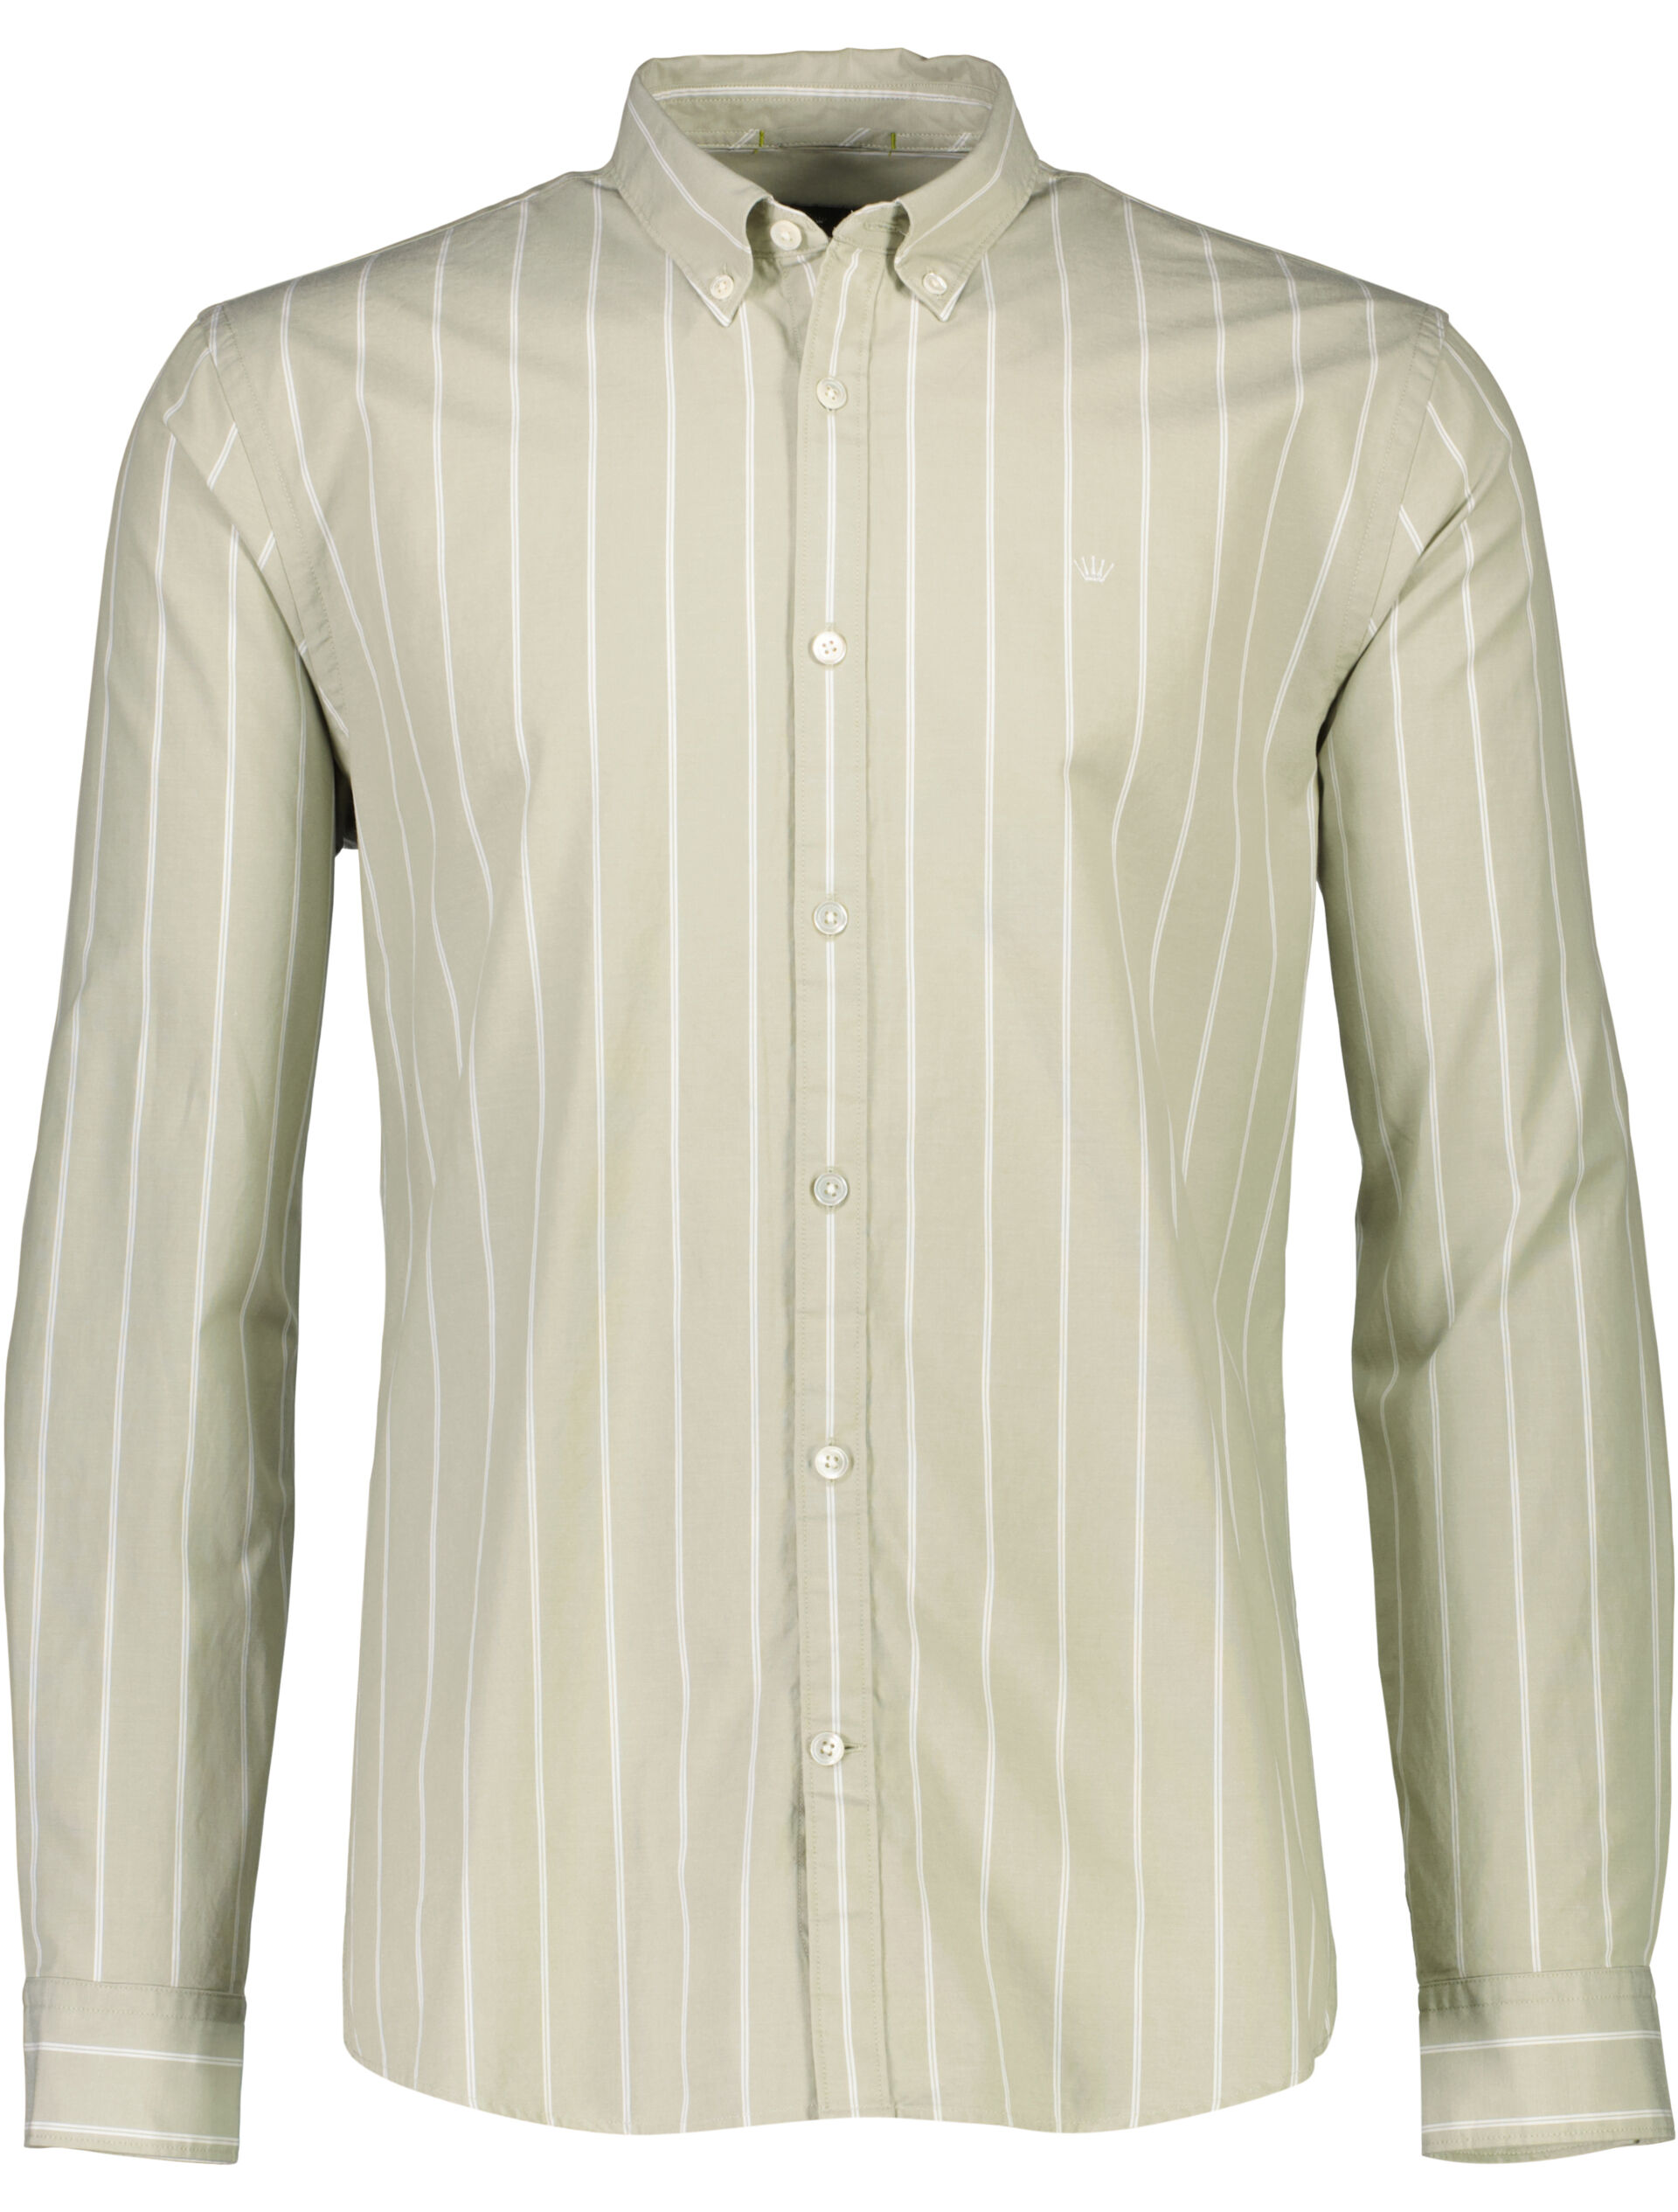 Oxford shirt Oxford shirt Green 60-202030